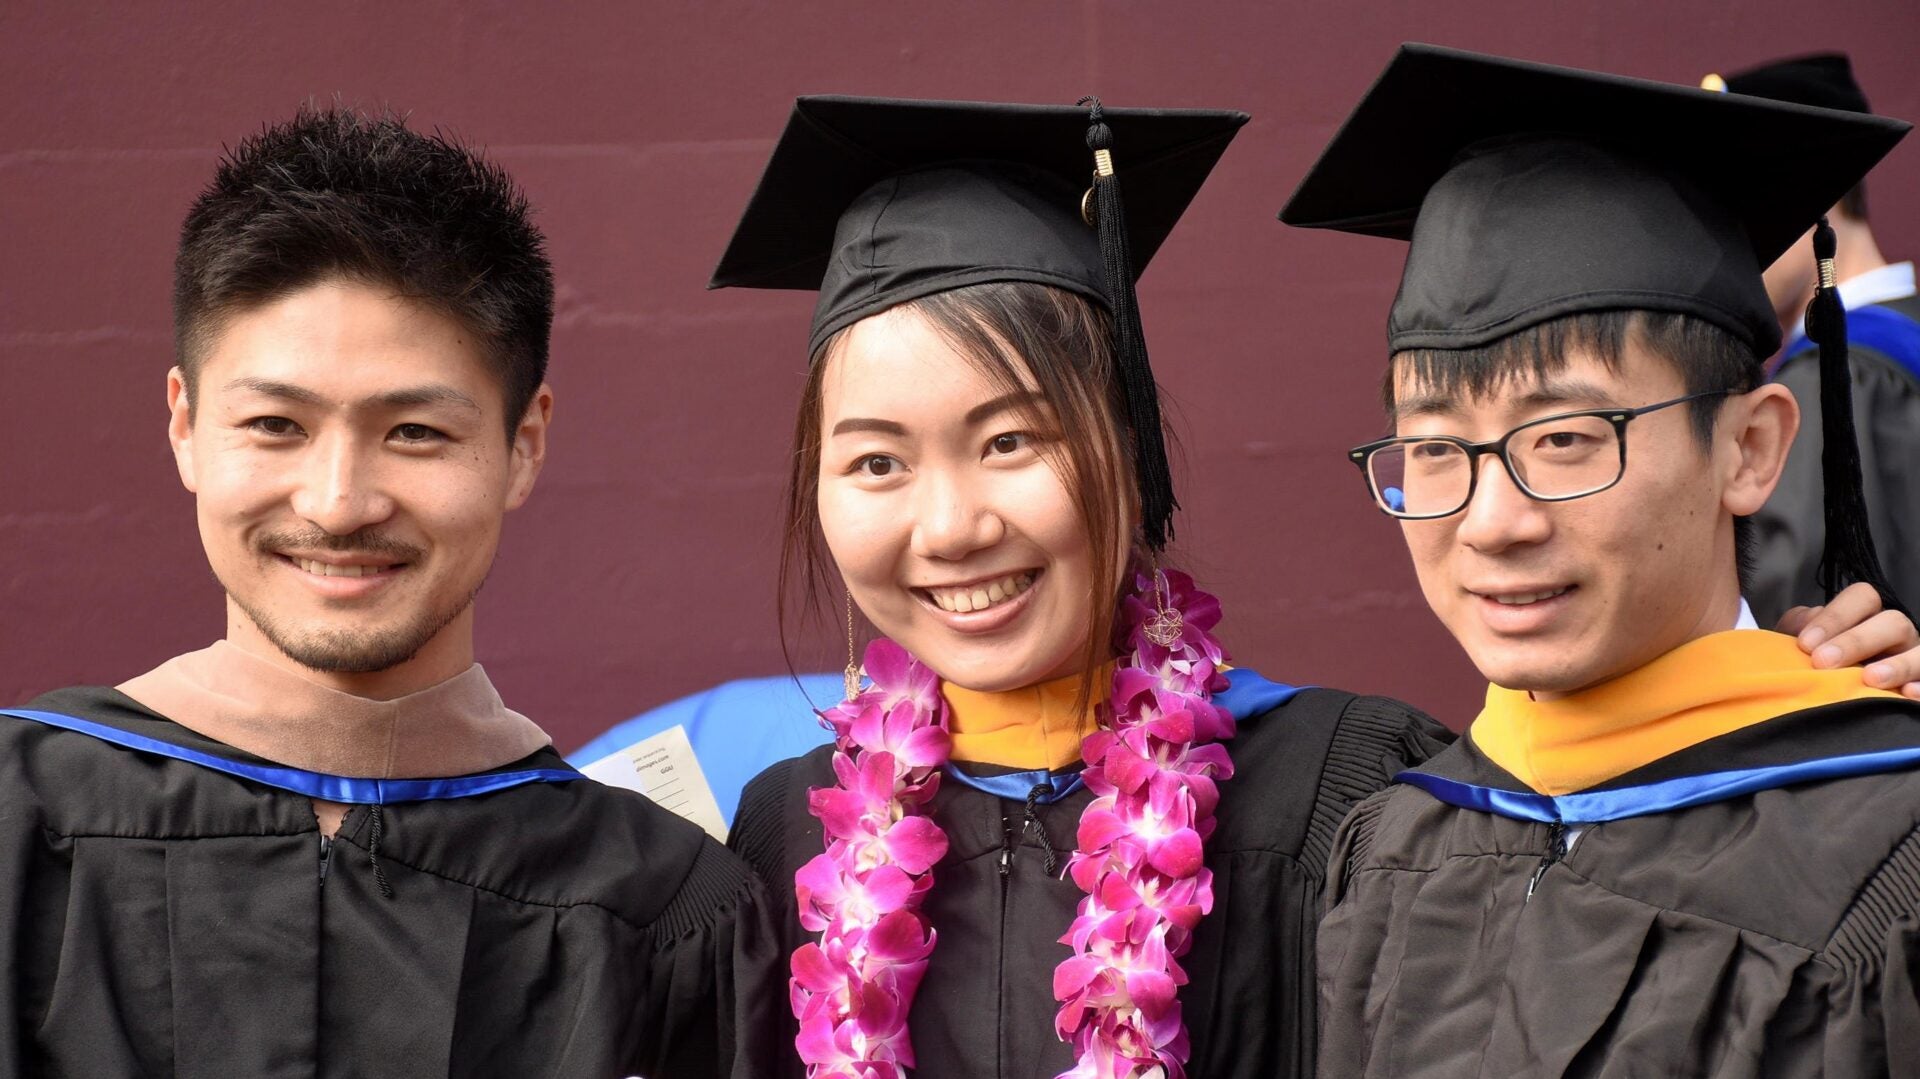 Three graduates wearing academic regalia and smiling.